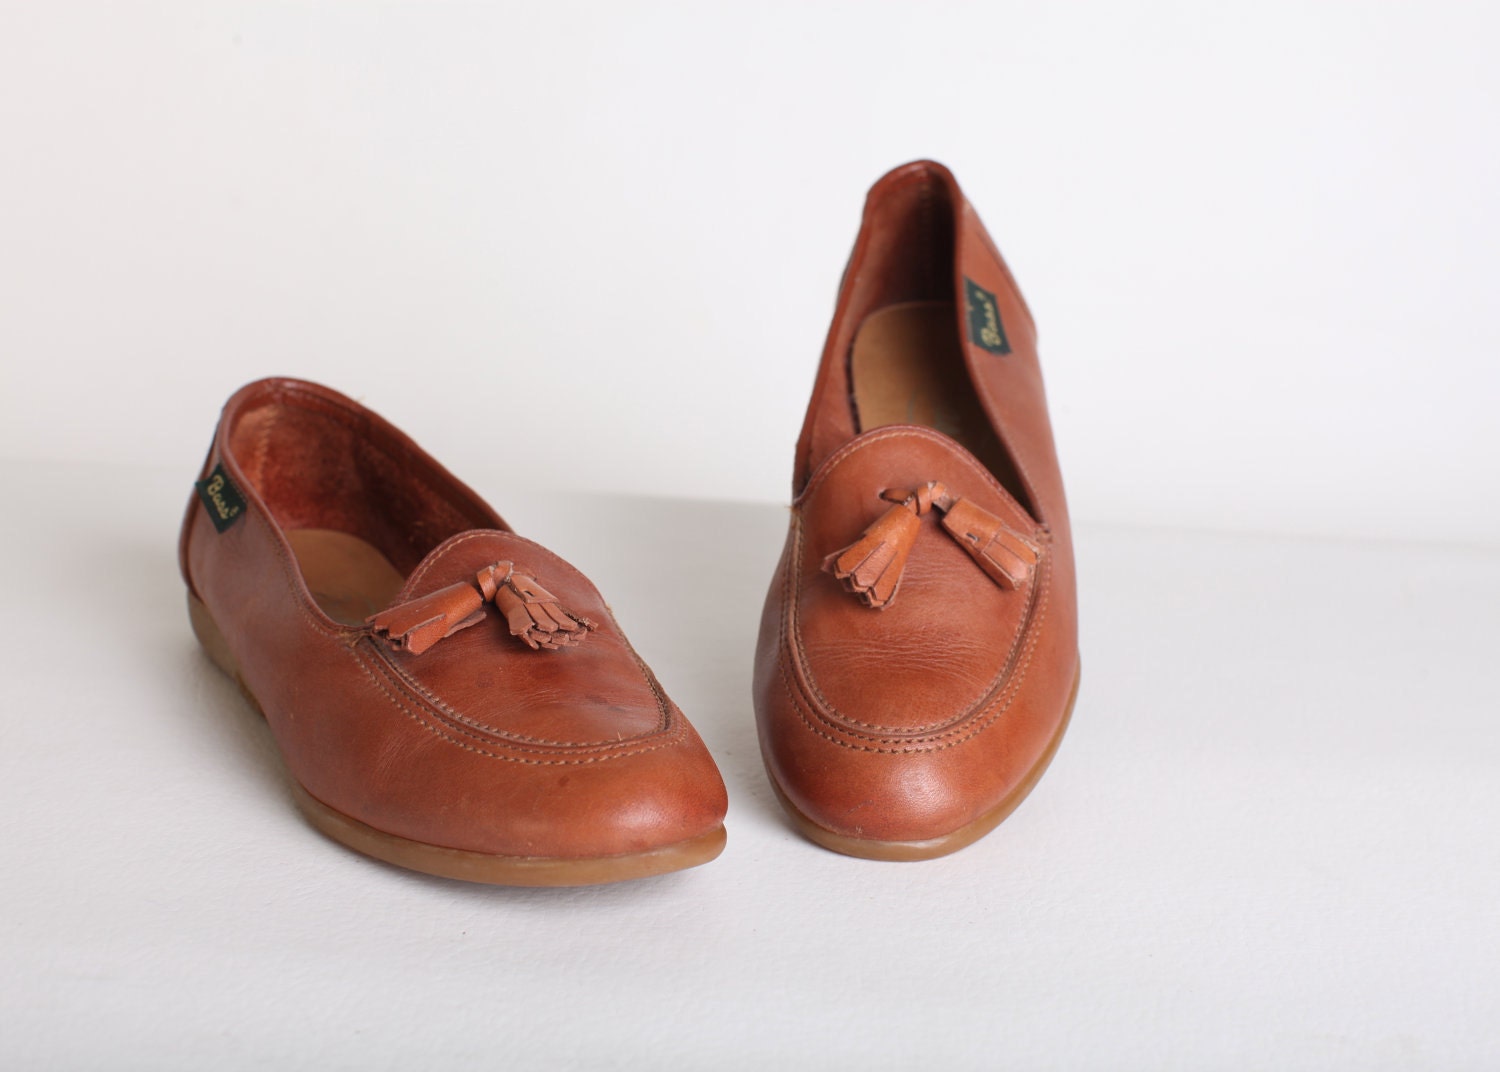 Vintage Size 7 Women's tan leather tassel loafers